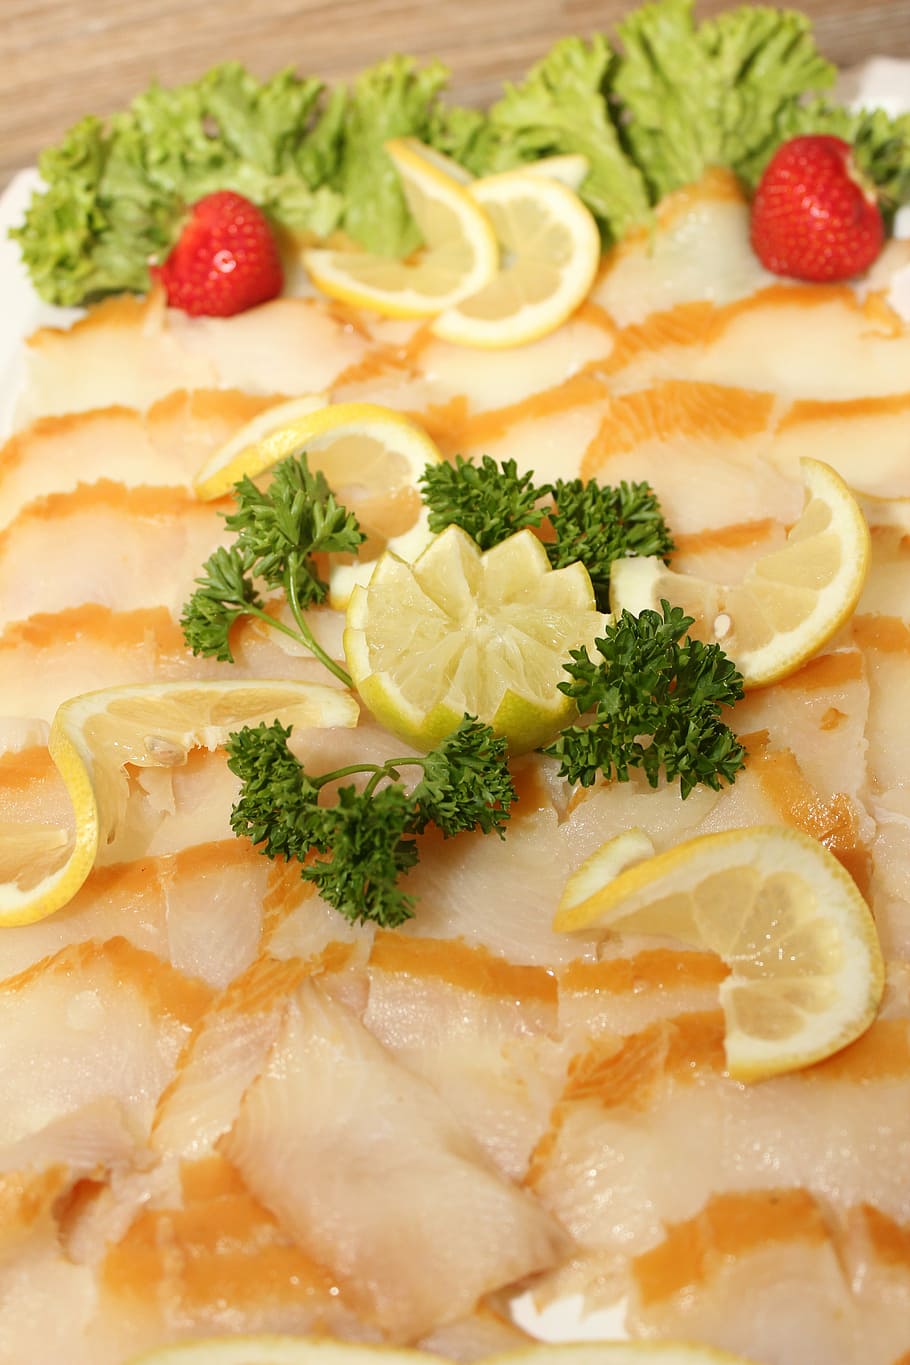 greenland halibut, fish, halibut, buffet, cold buffet, lemon, parsley, salad, strawberries, food and drink